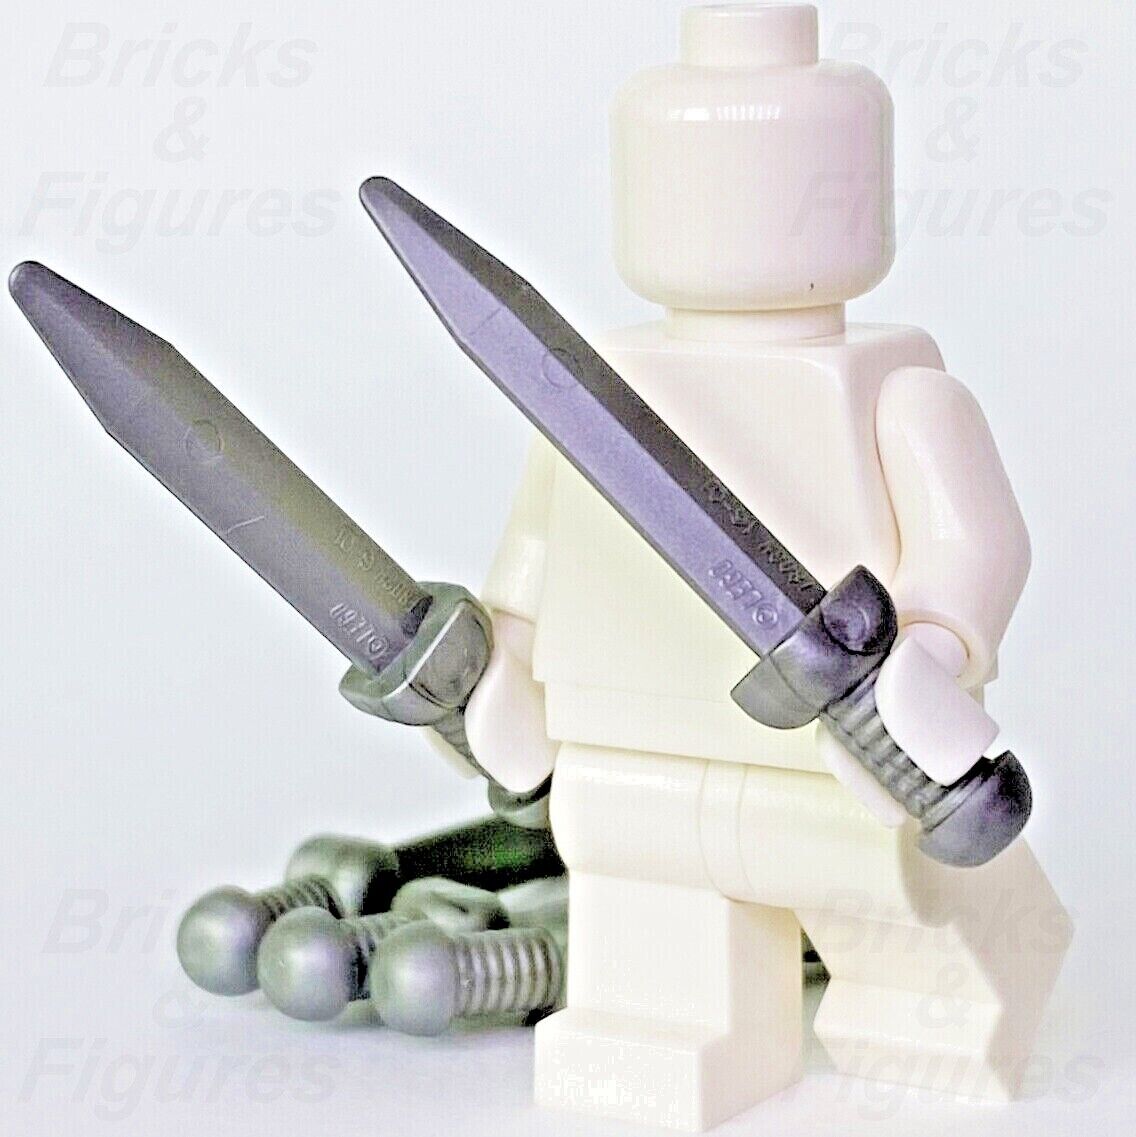 5 x LEGO Flat Silver Roman Gladius Swords Blades Minifigure Weapon Parts 18034 - Bricks & Figures